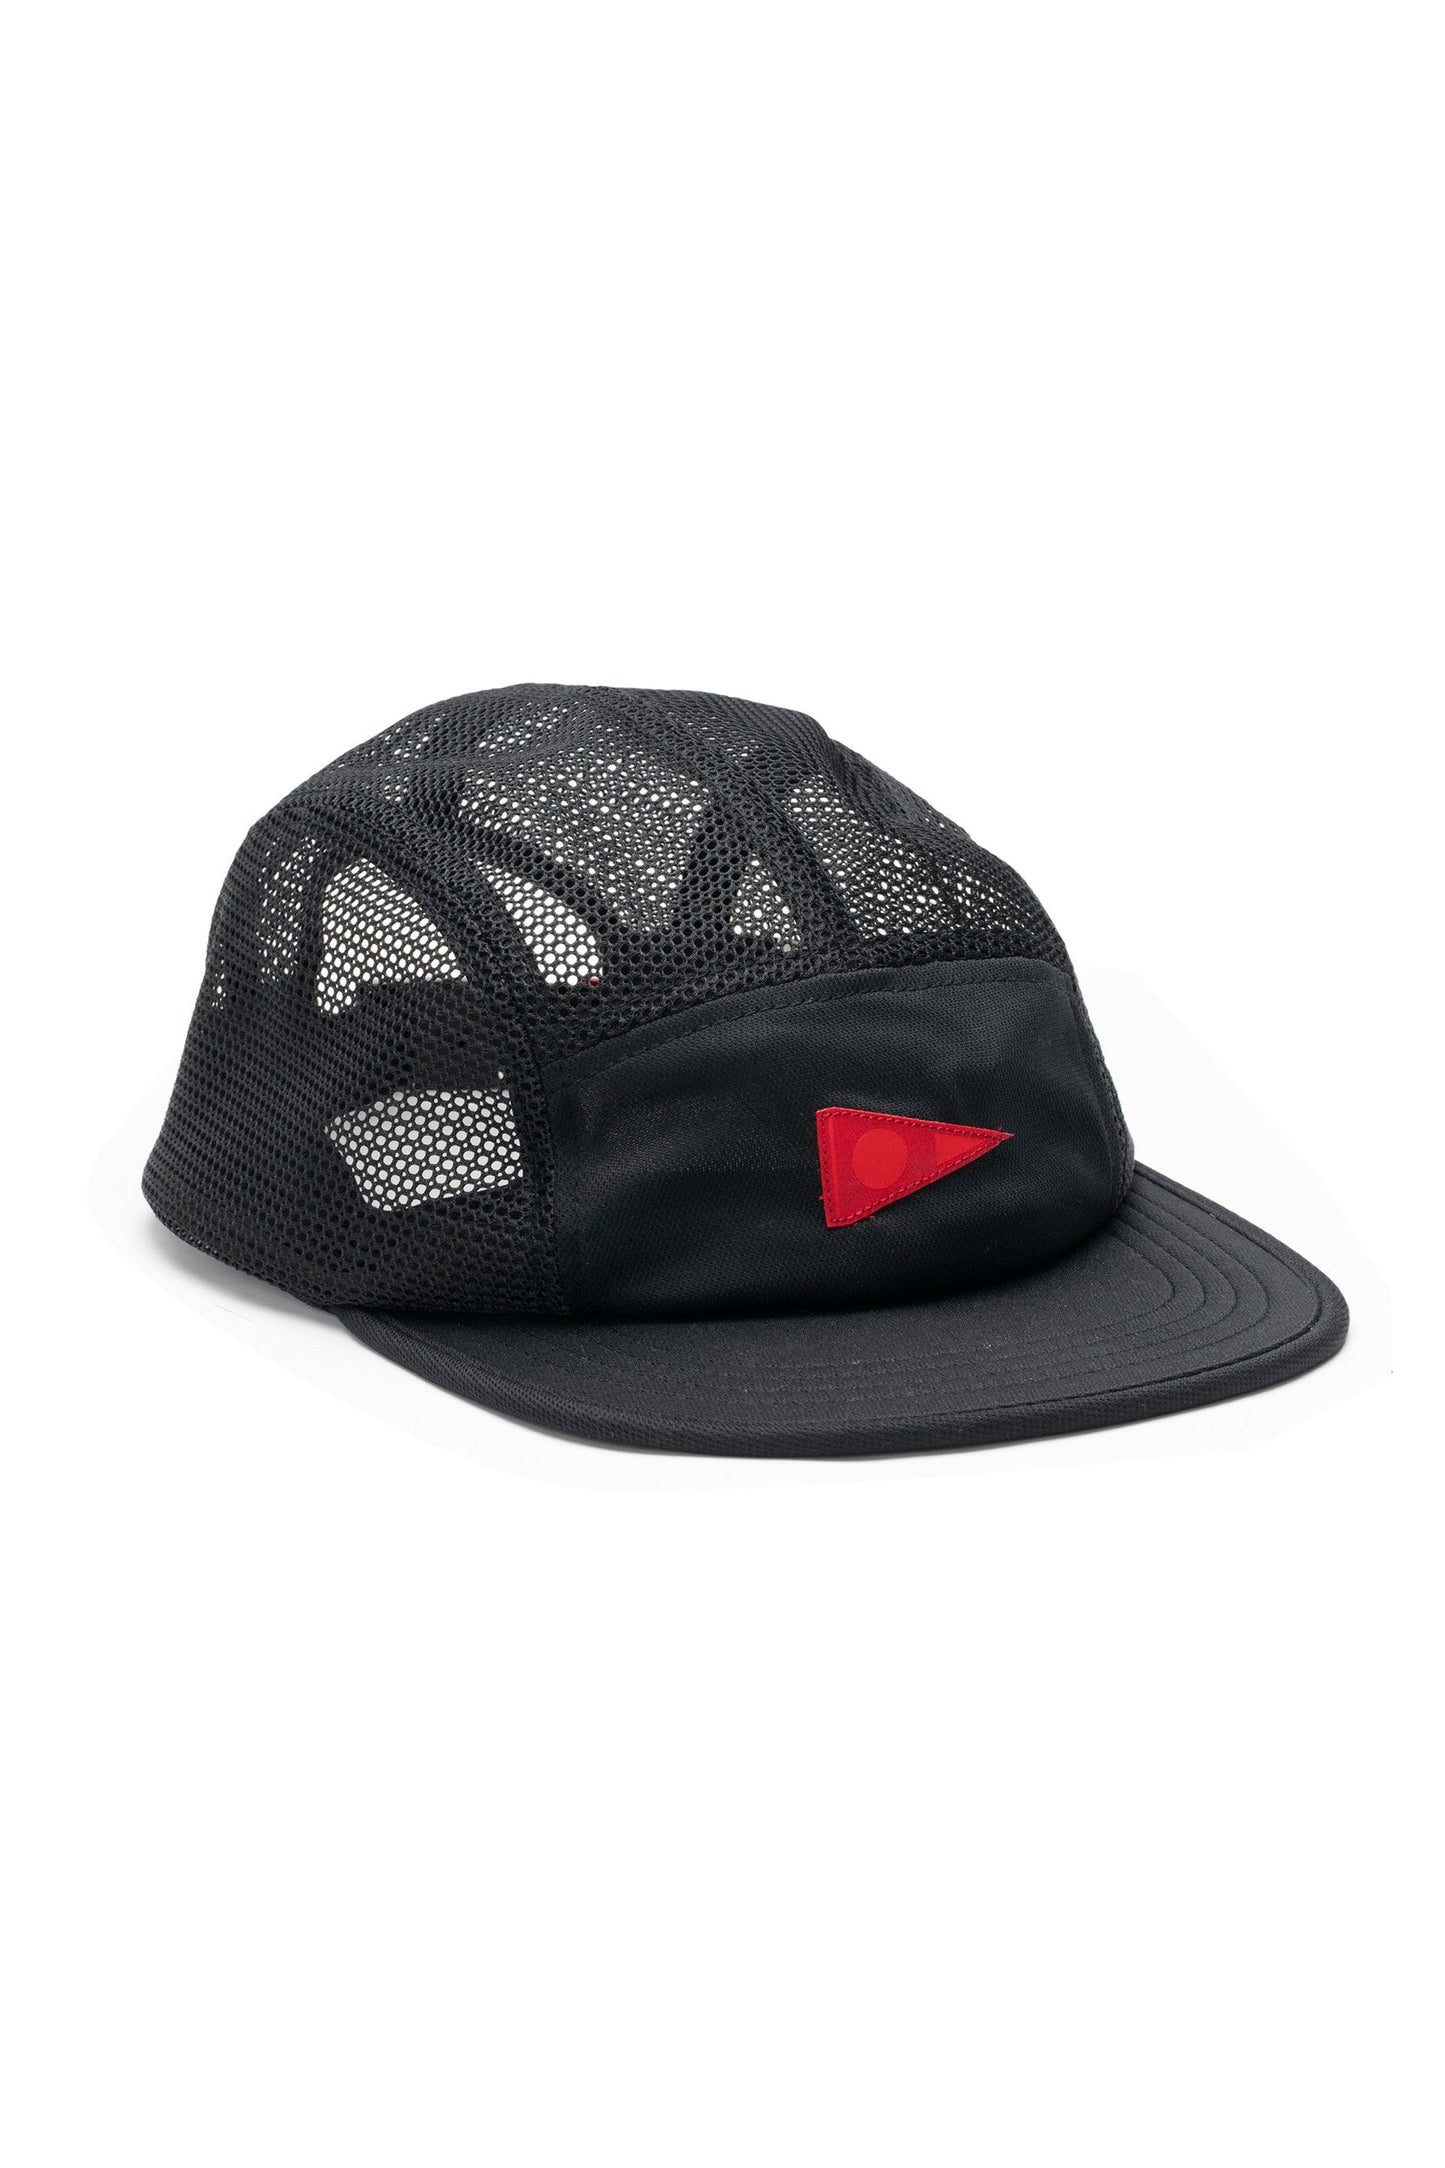 Pukas-Surf-Shop-florence-marine-hat-airtex-unstructured-hat-black